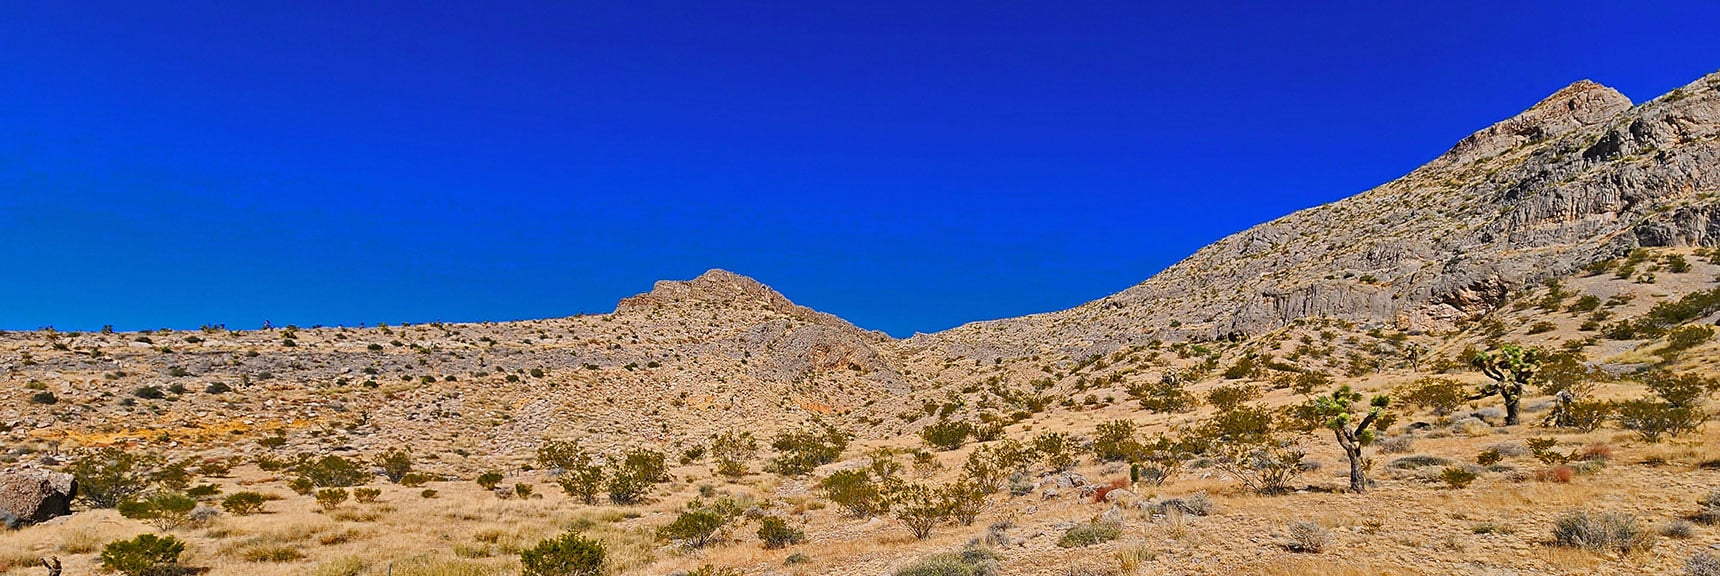 Approaching Southwest Edge of the Bluff | Landmark Bluff | Lovell Canyon, Nevada